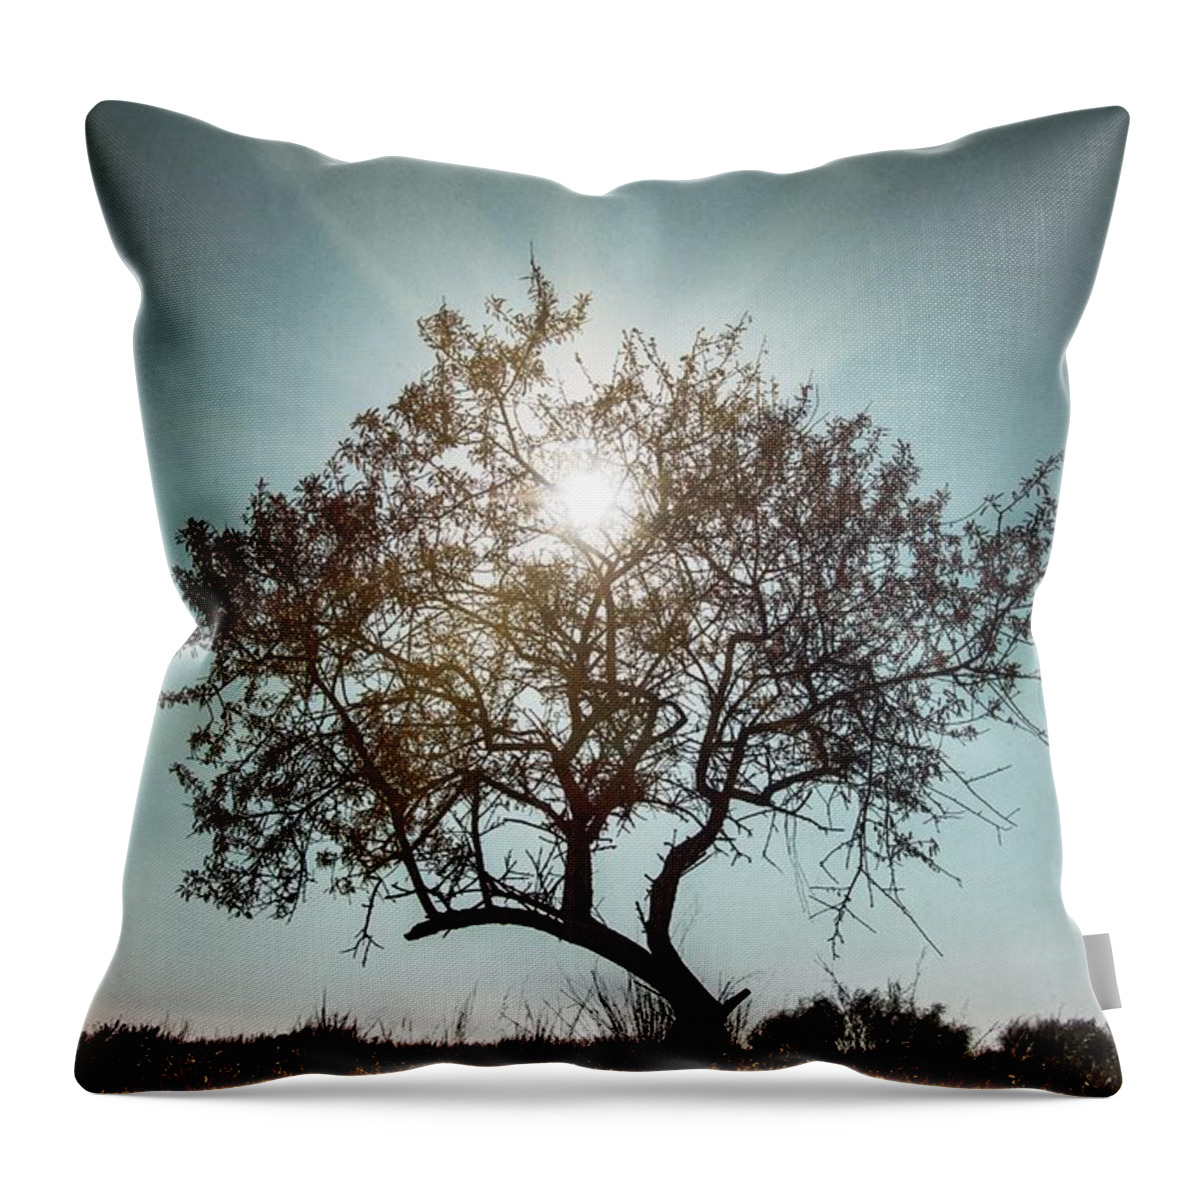 Dark Throw Pillow featuring the photograph Single Tree by Carlos Caetano